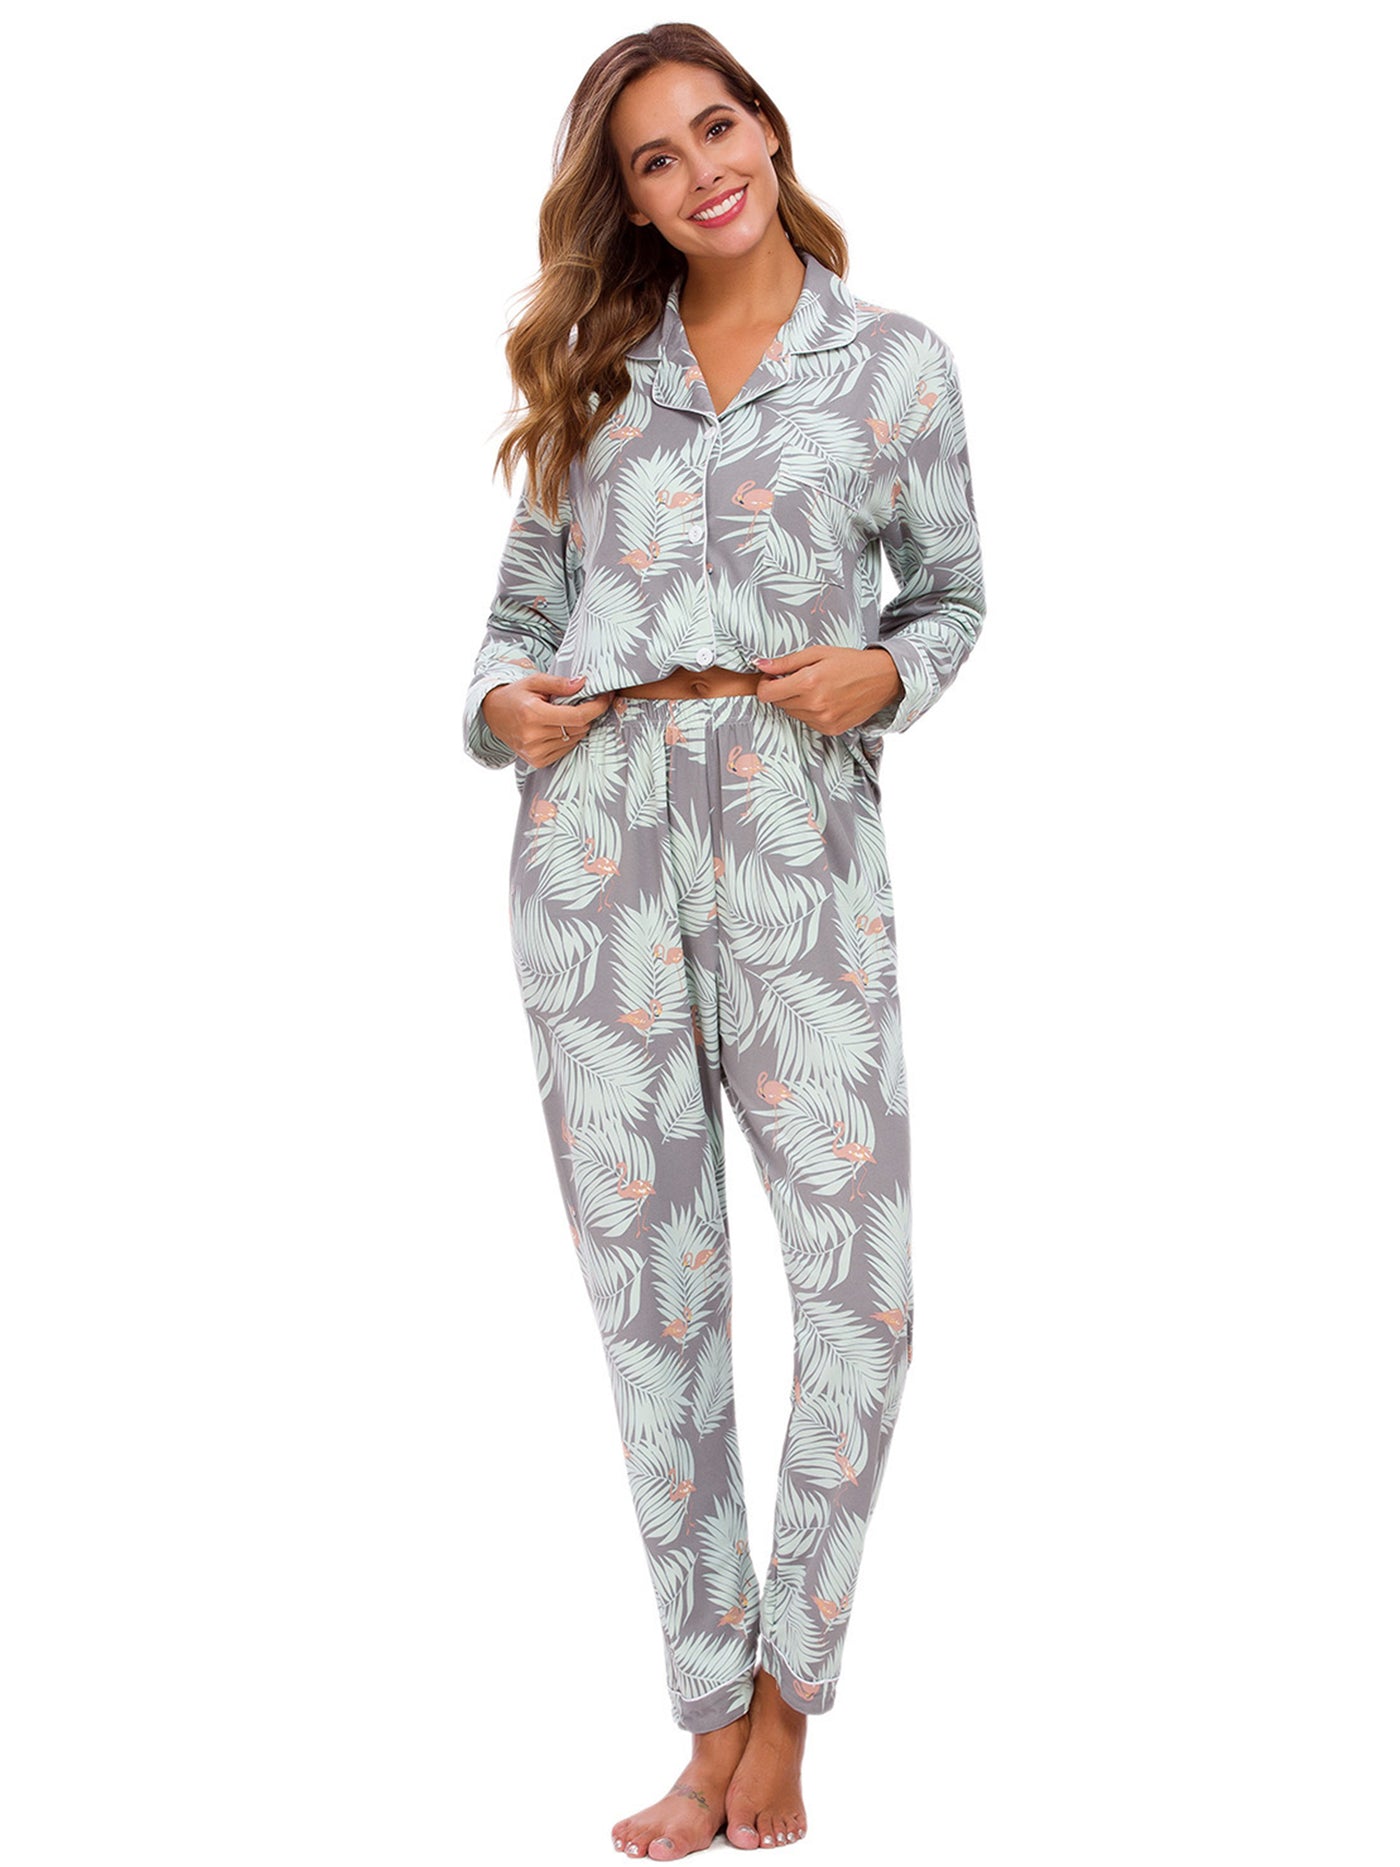 Bublédon Women's Sleepwear Cute Print Long Sleeve Pajama Set